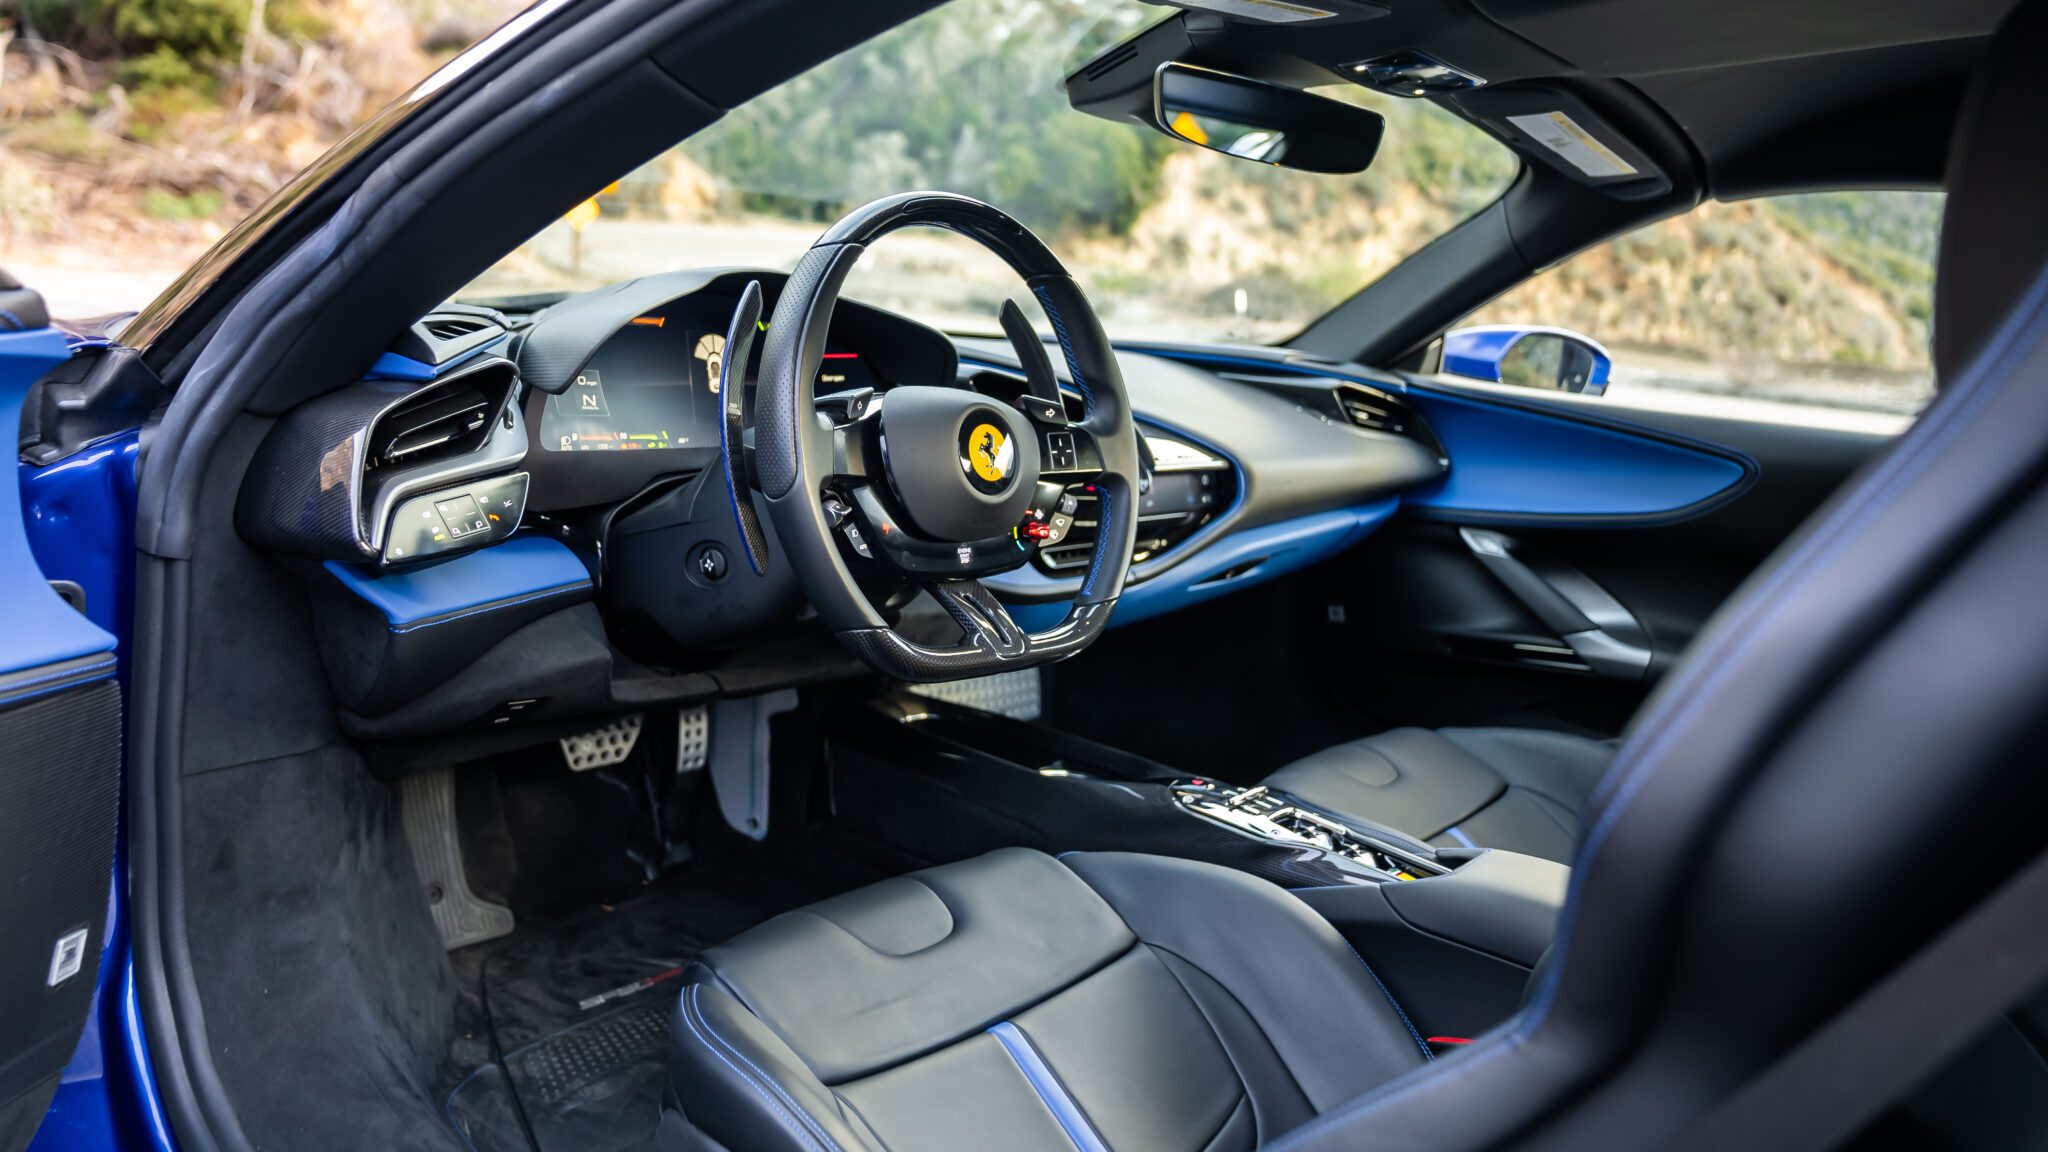 An image of the Ferrari SF90 Spider's interior.